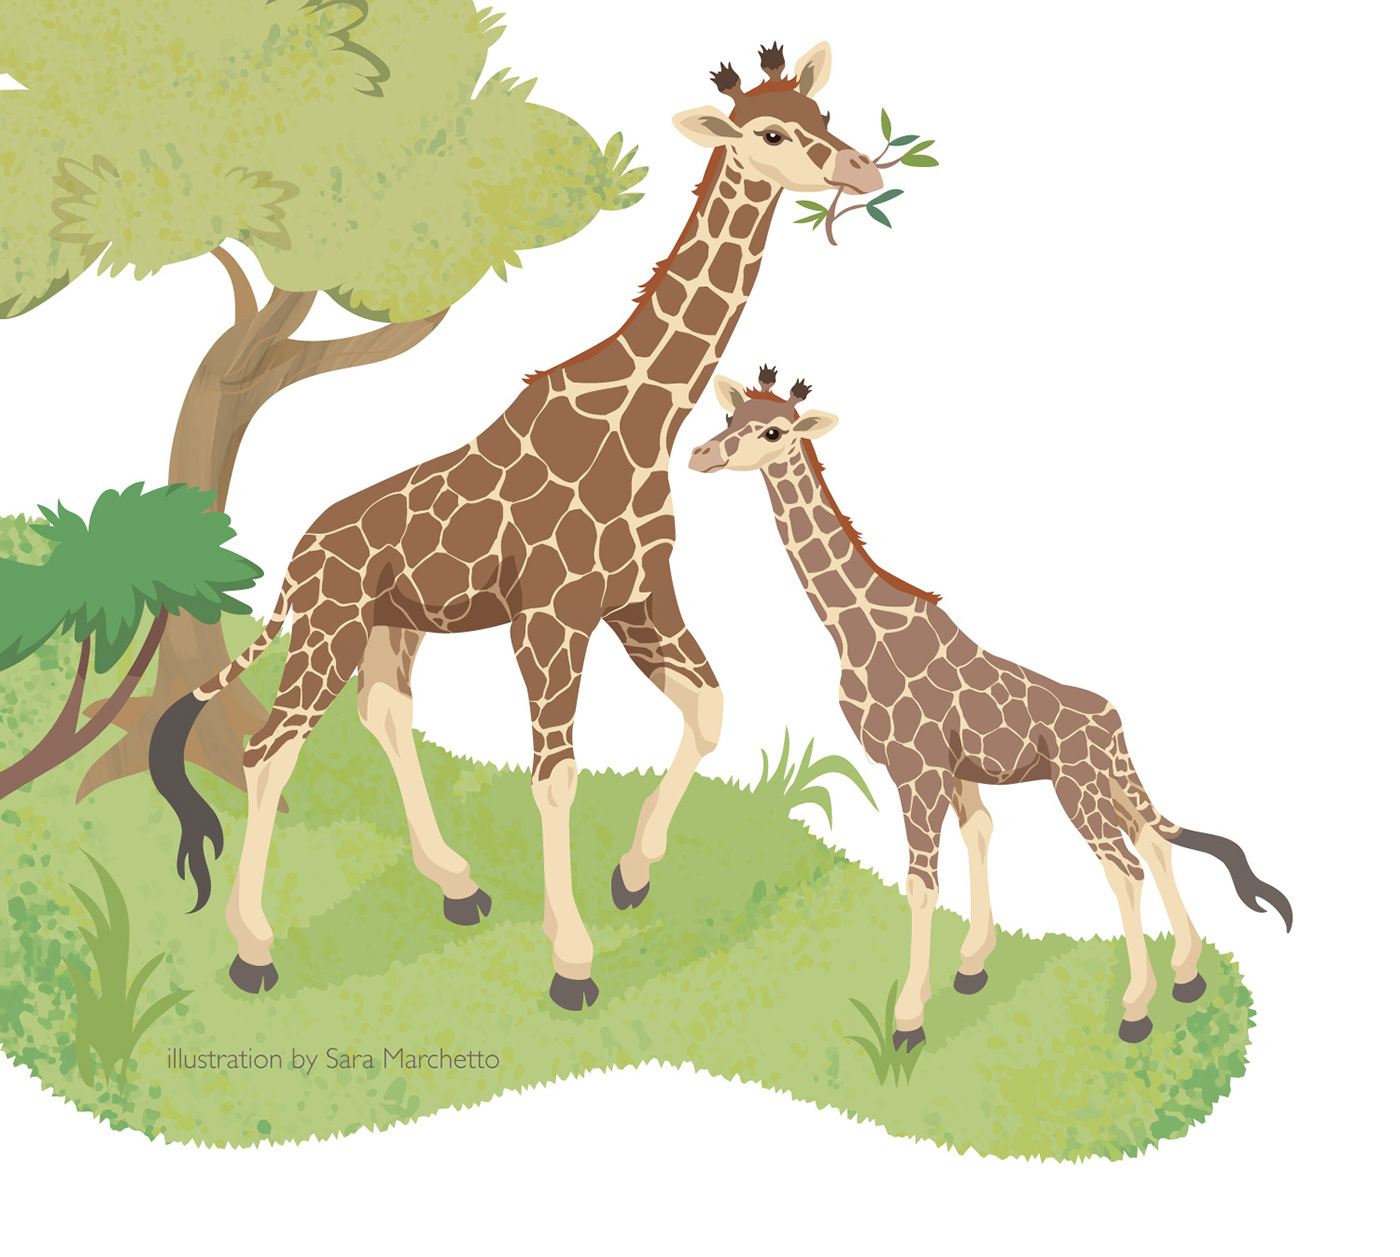 animals Digital Art  Vector Illustration Character design  children book kids orangutan zebra giraffe lion